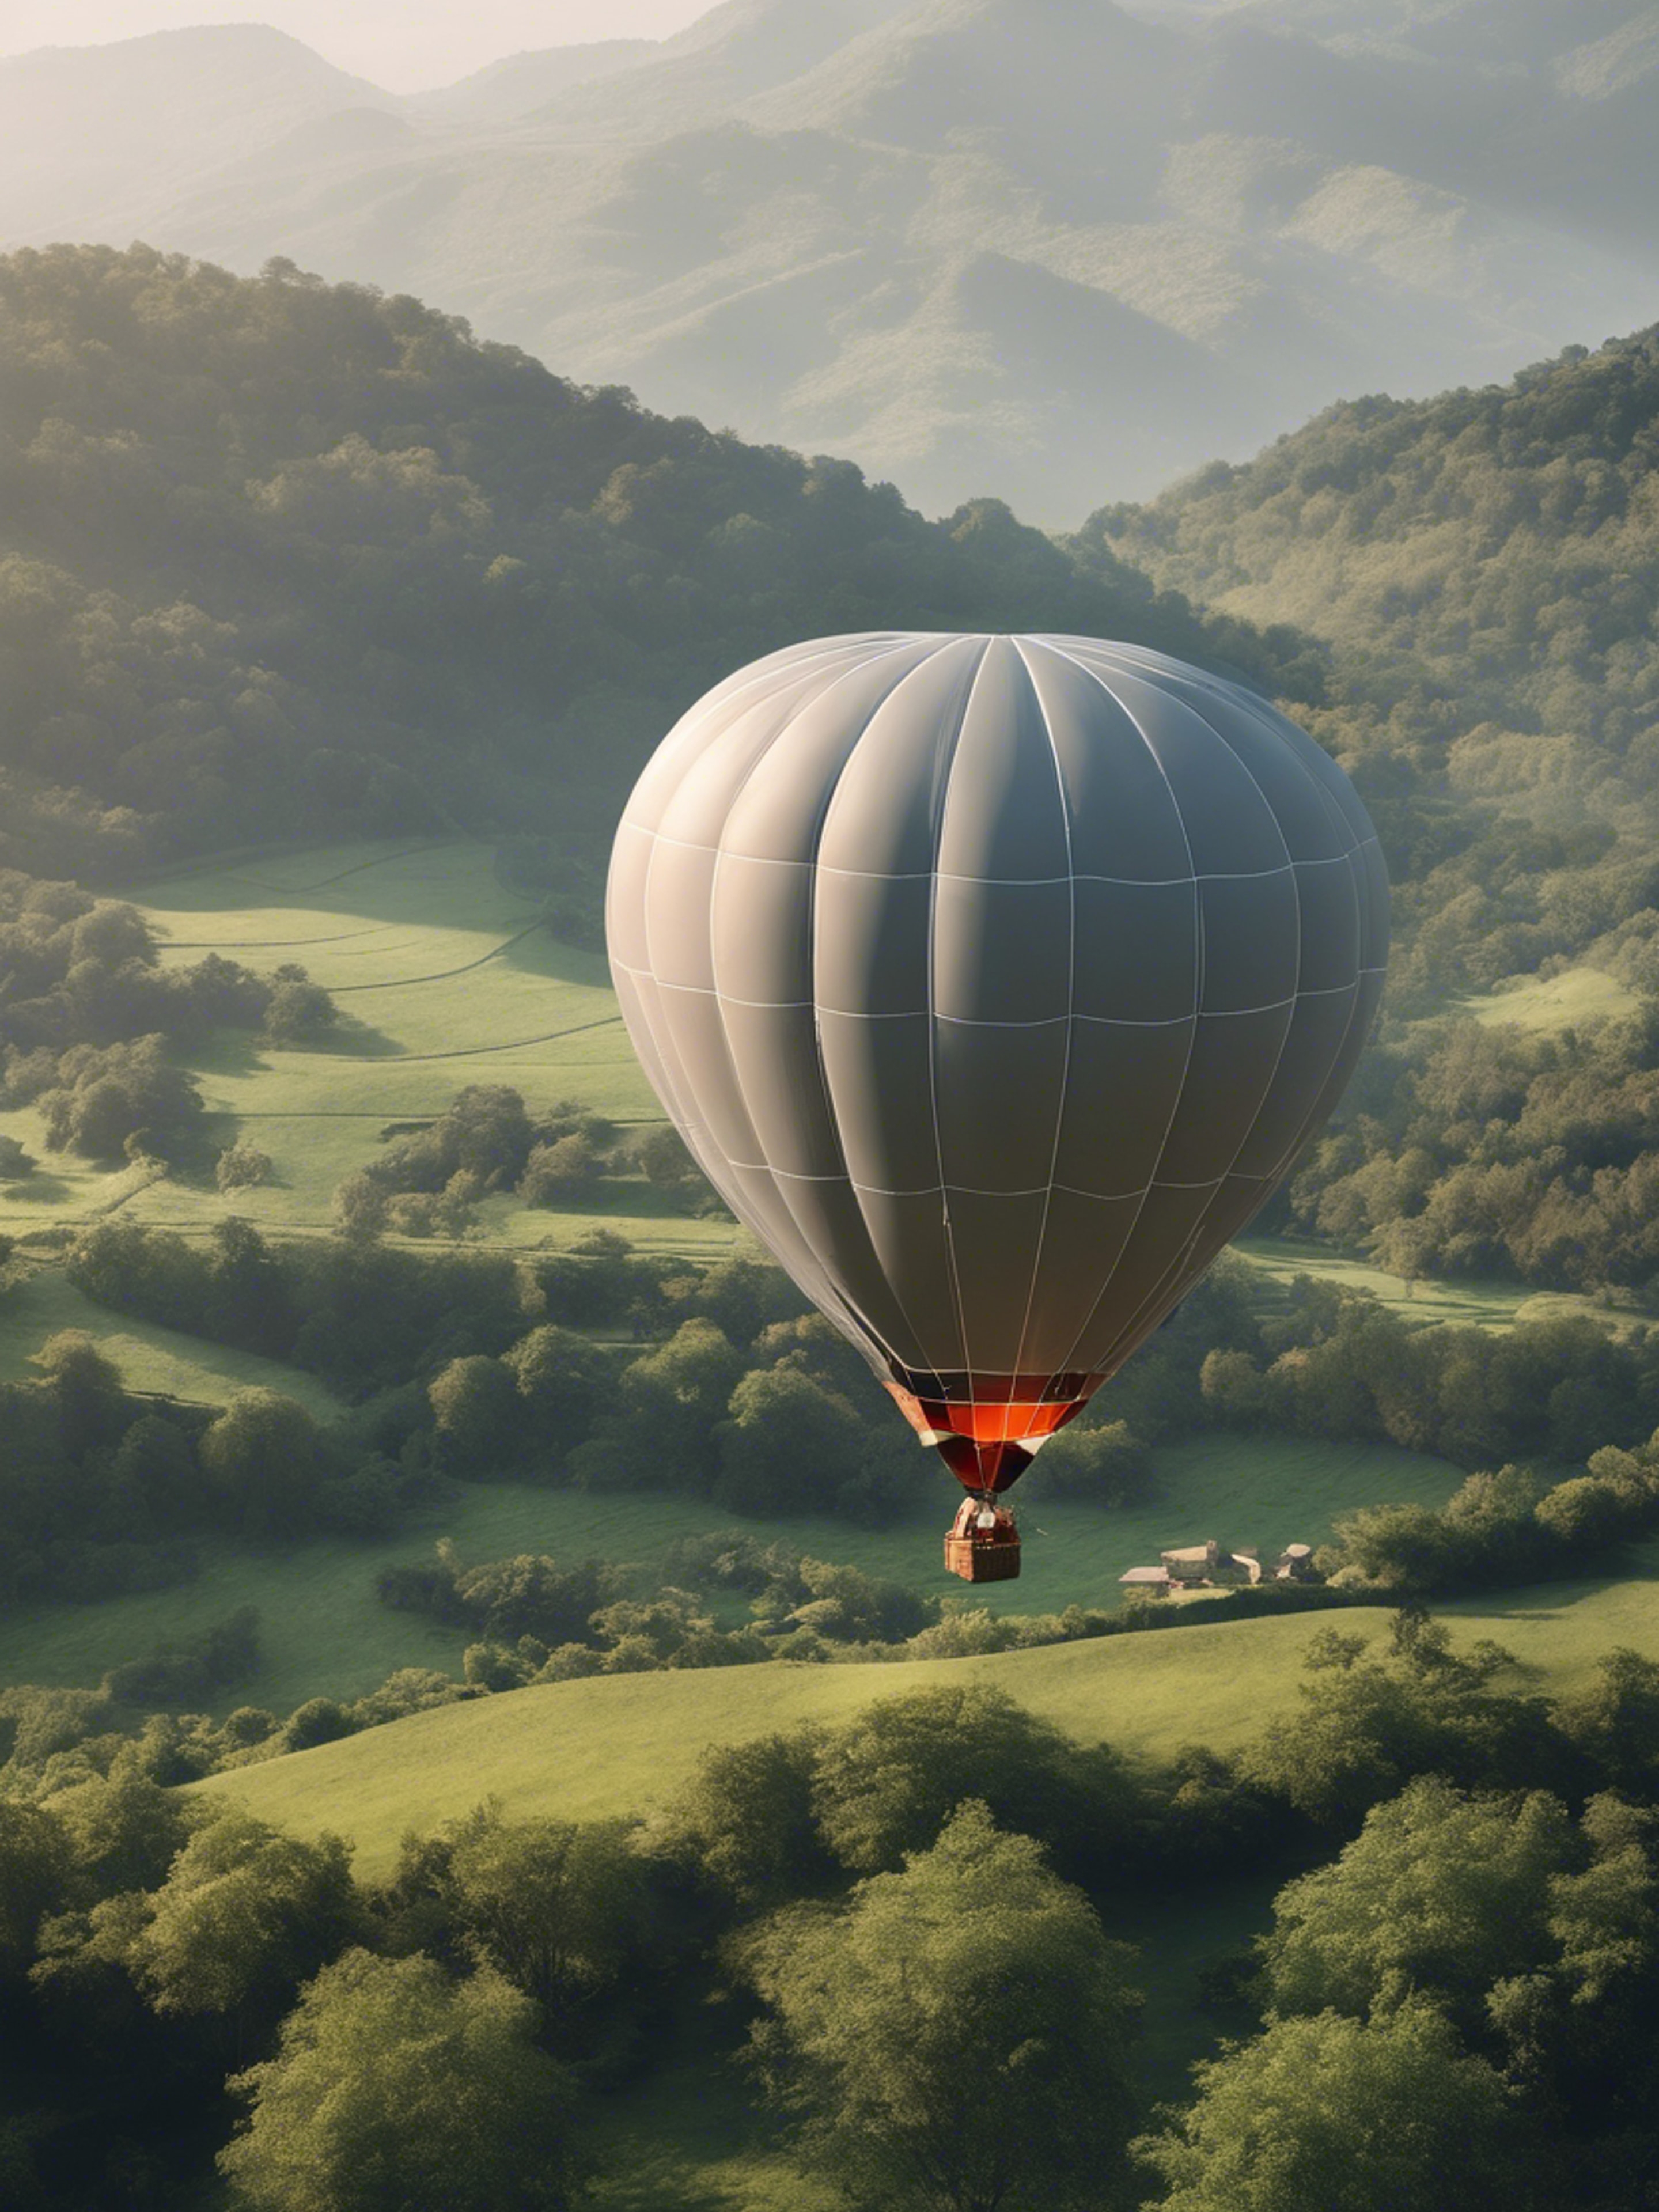 A light gray hot air balloon floating high above a lush, picturesque valley.壁紙[28a1de84b1f14bd4b73d]